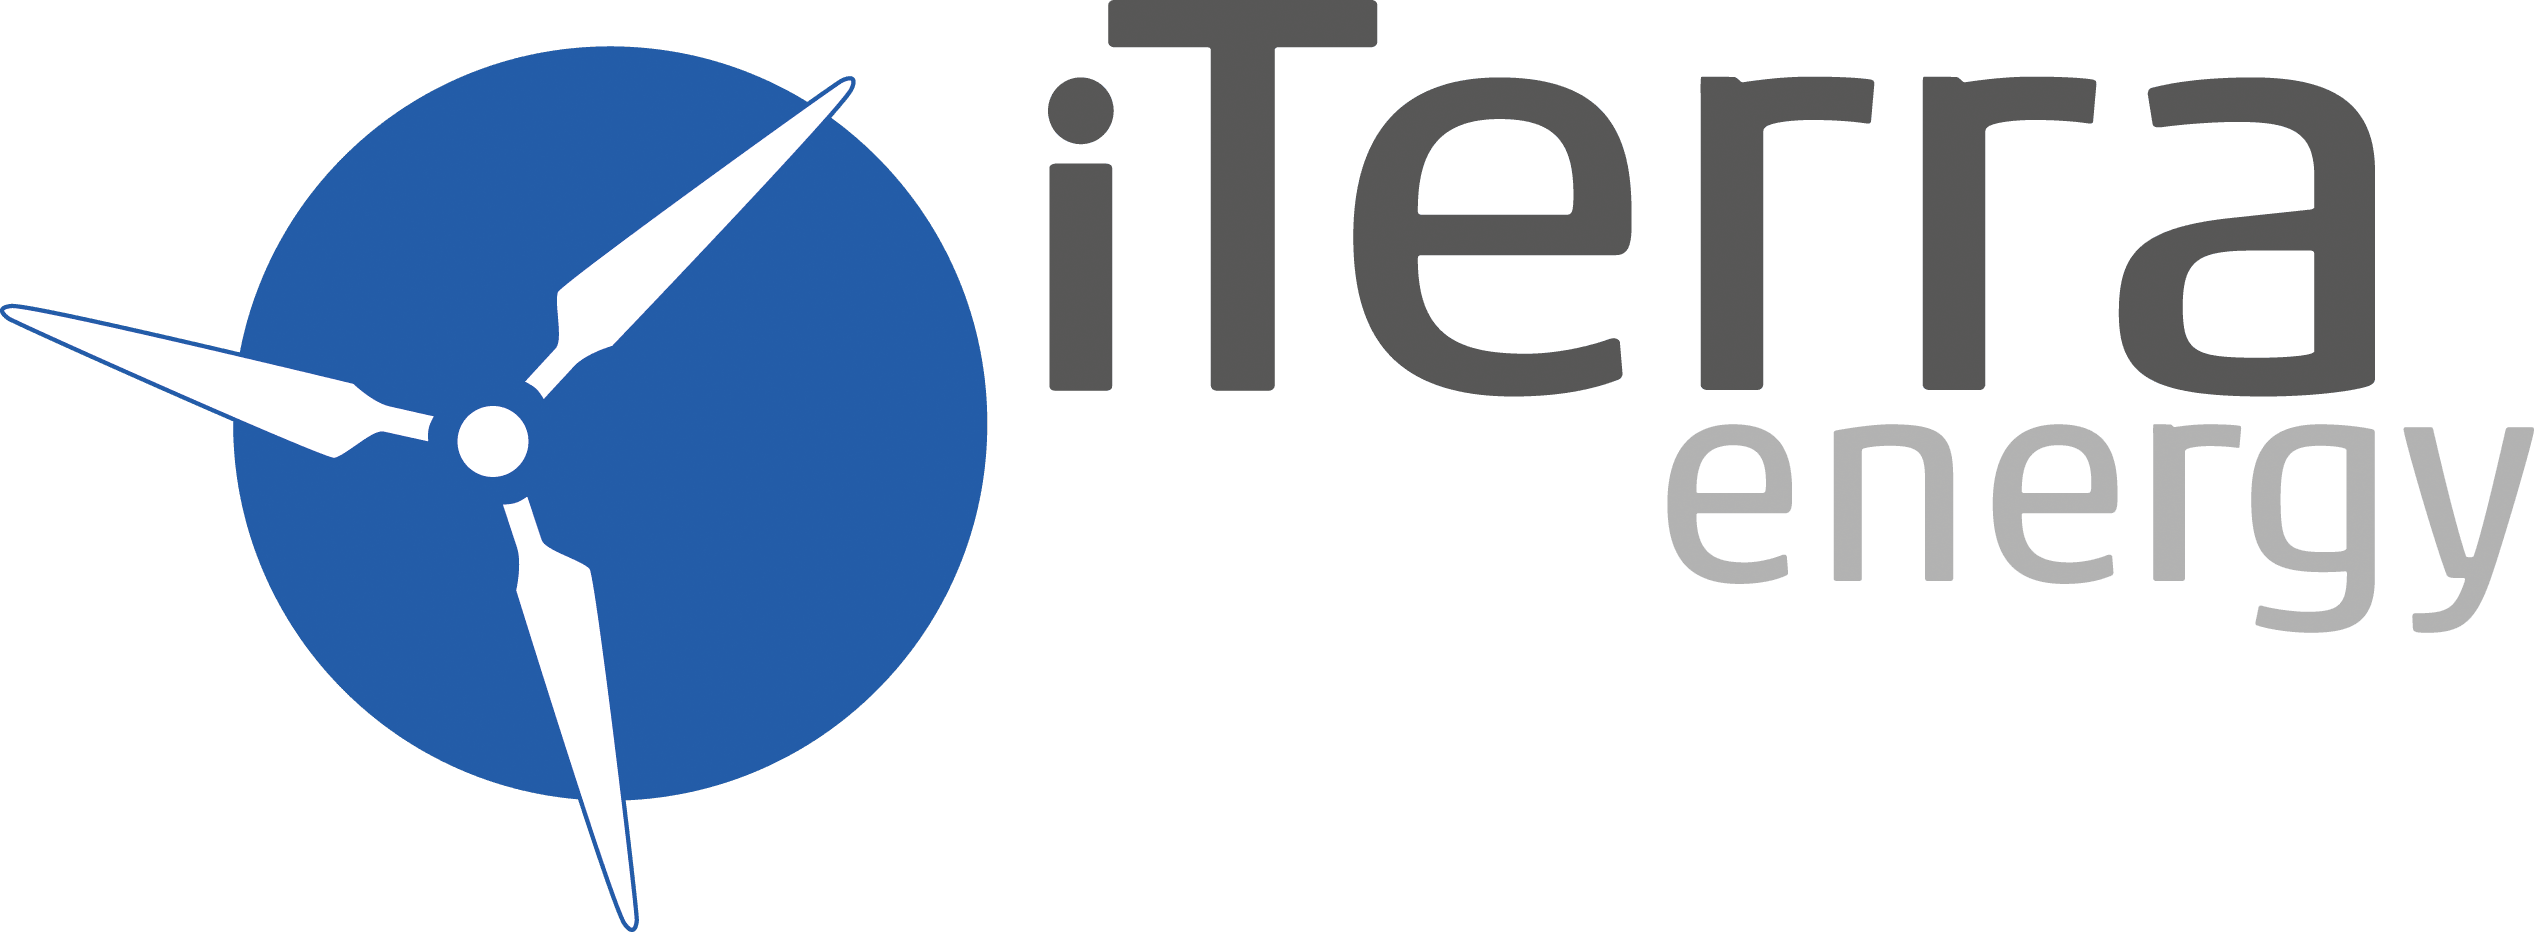 iTerra energy GmbH logo